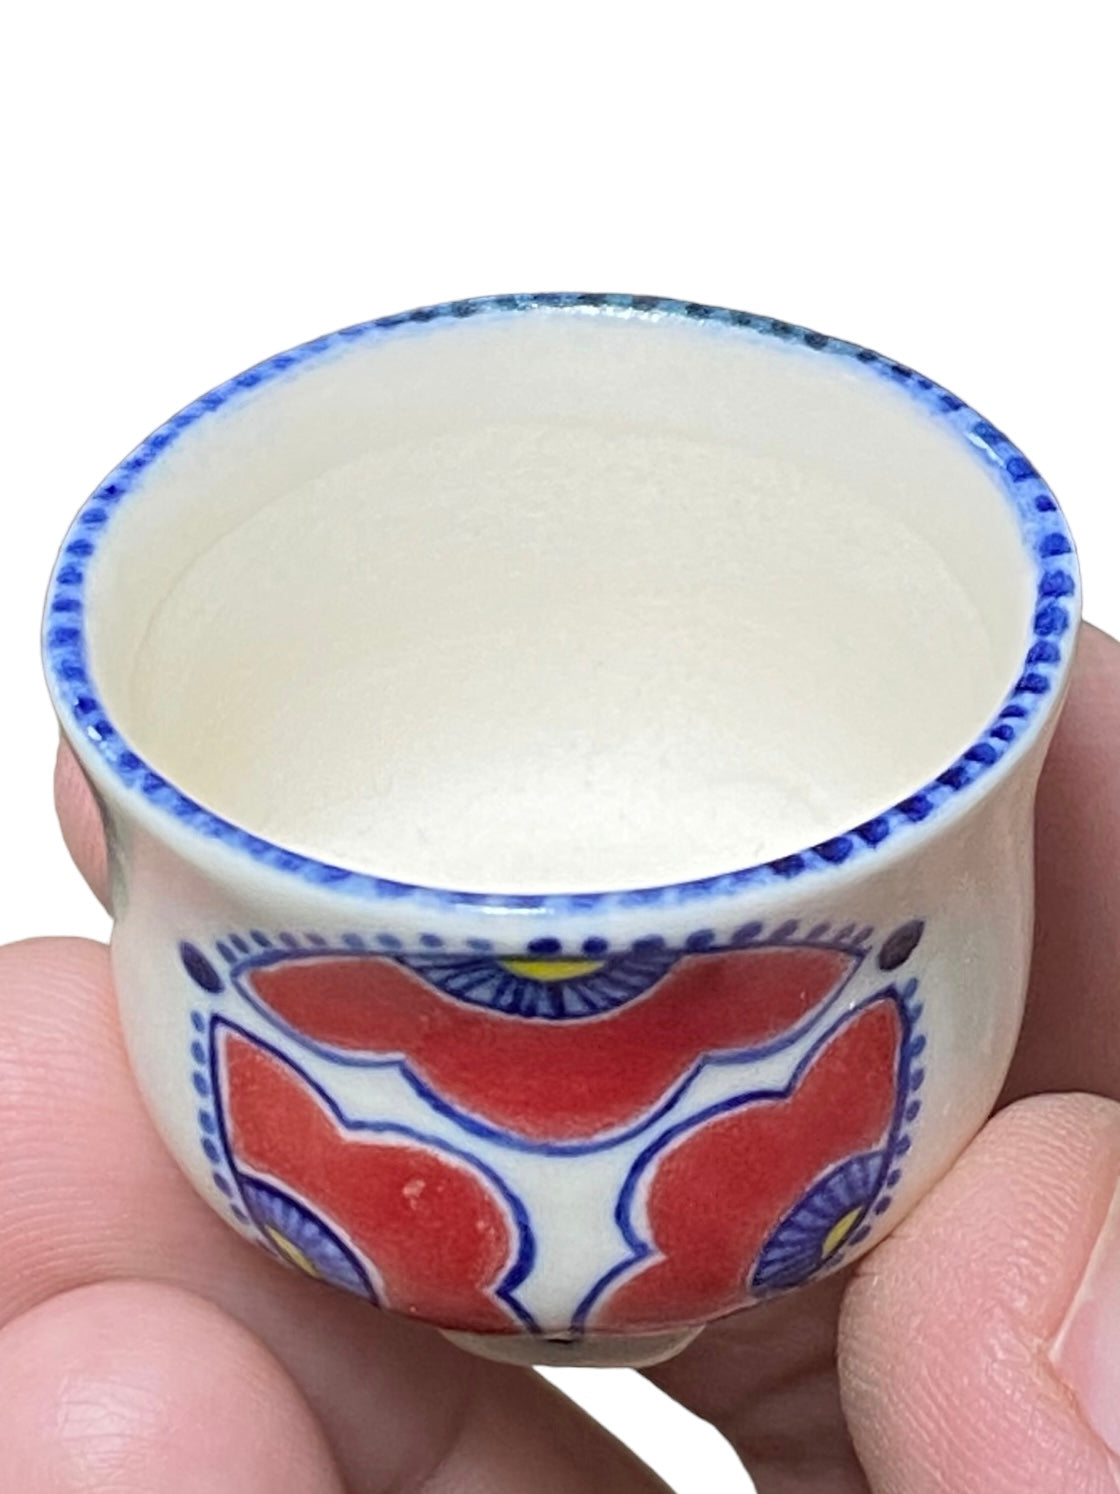 Oshima Mayu - Painted Mame Bonsai or Accent Pot